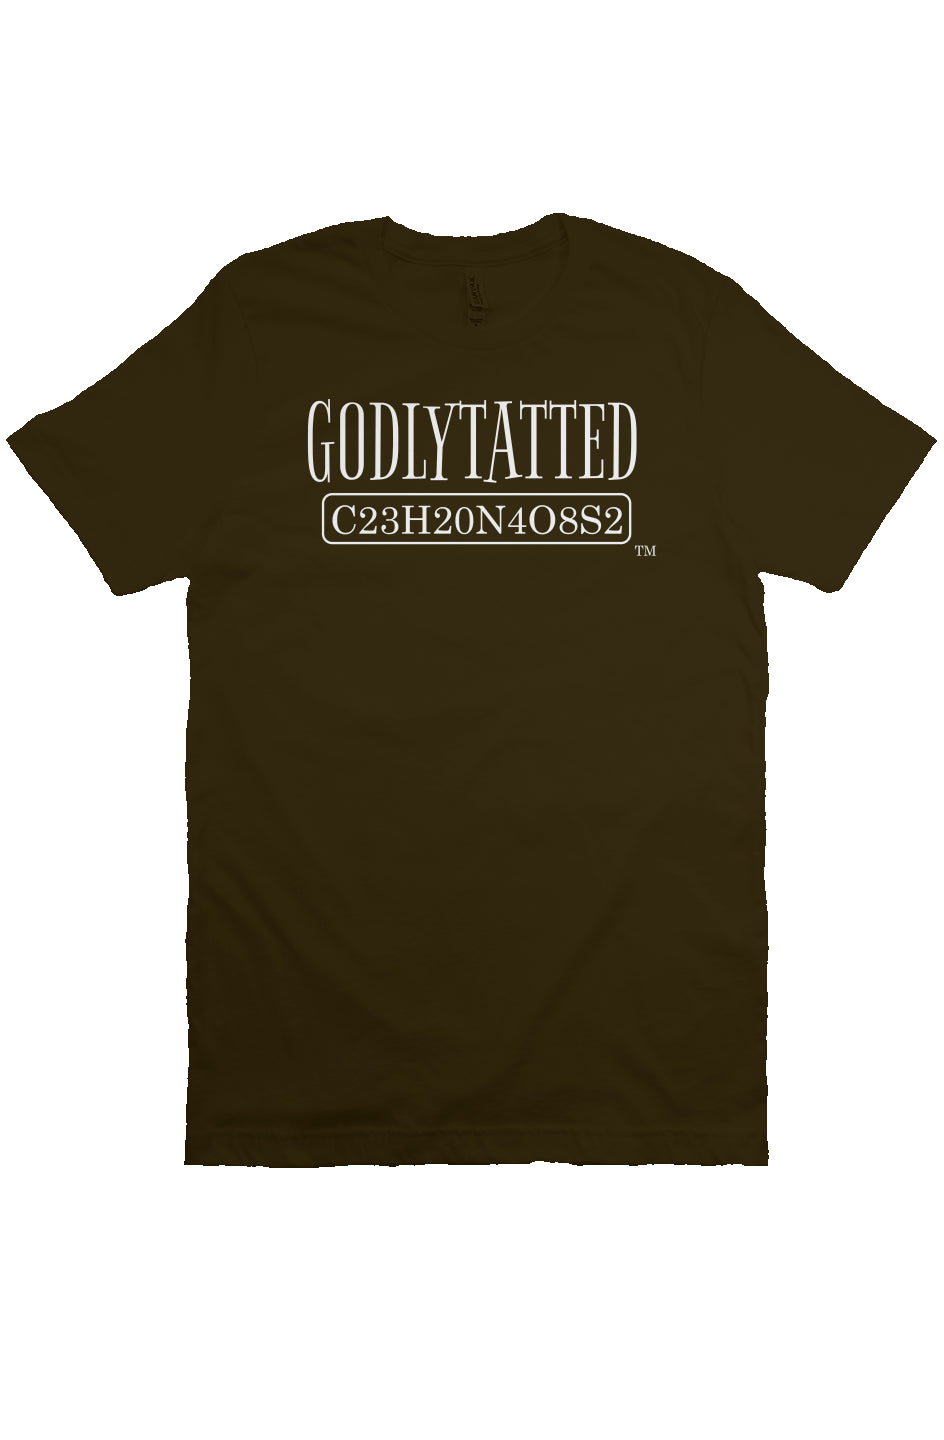 Godlytatted - Adult - Brown - White Logo